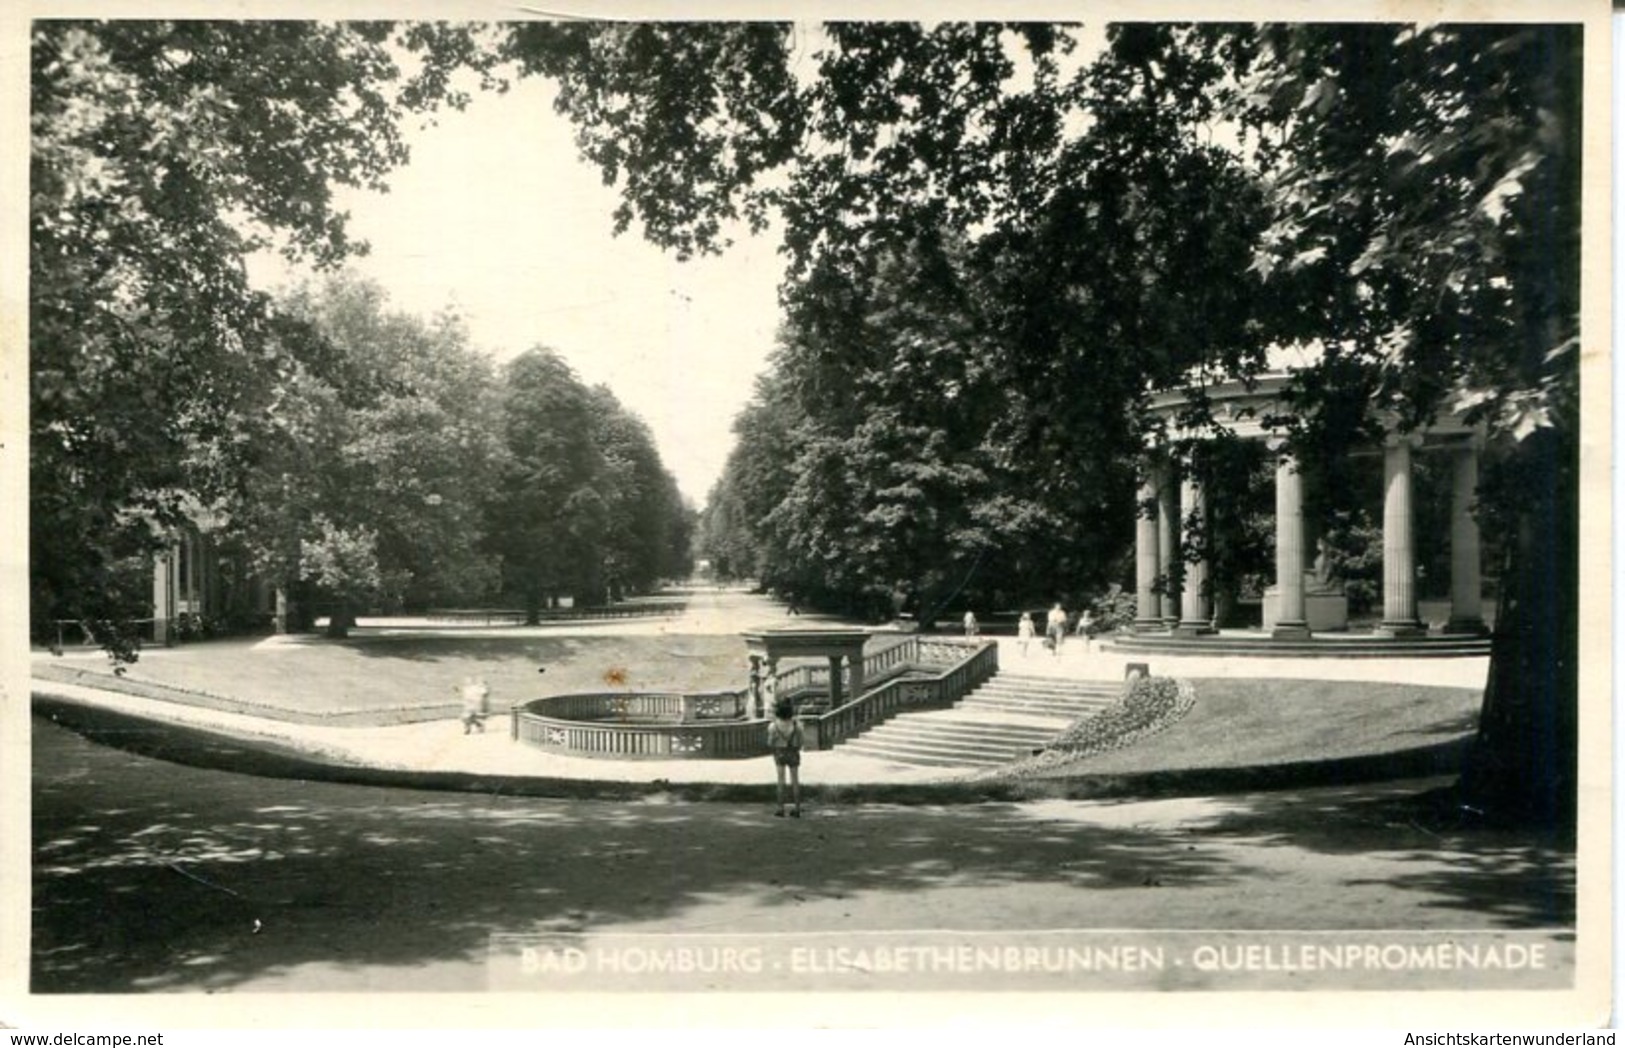 005944  Bad Homburg - Elisabethenbrunnen. Quellenpromenade  1952 - Bad Homburg